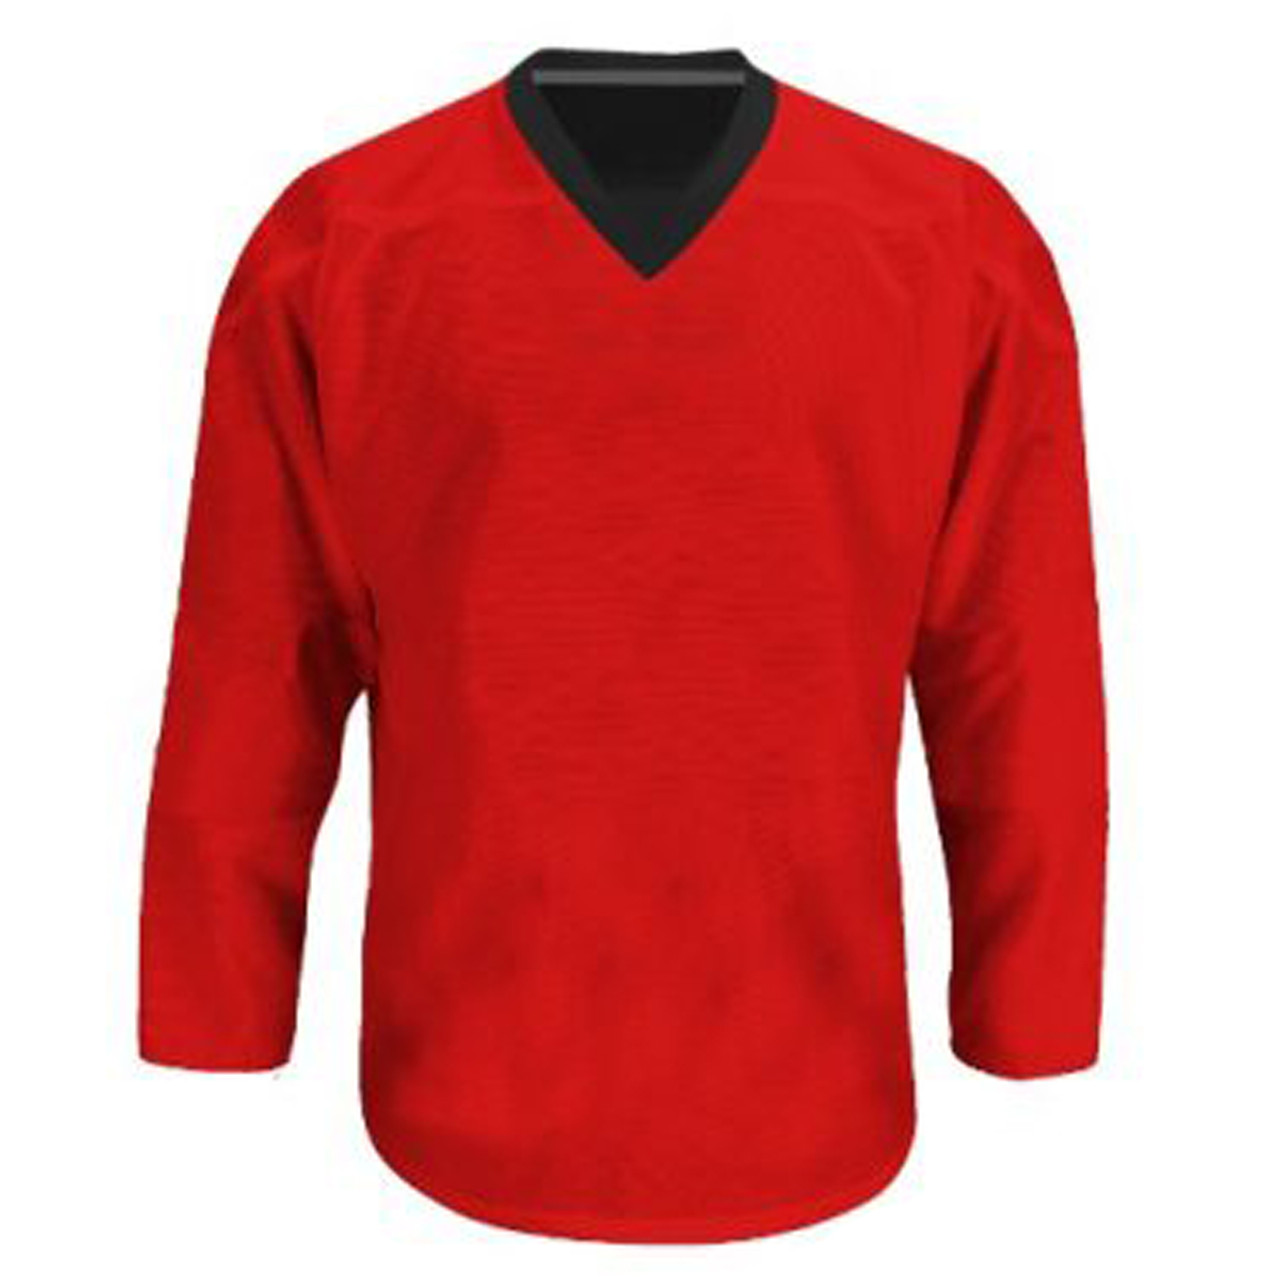 Senior Hockey Jersey - Black, Red